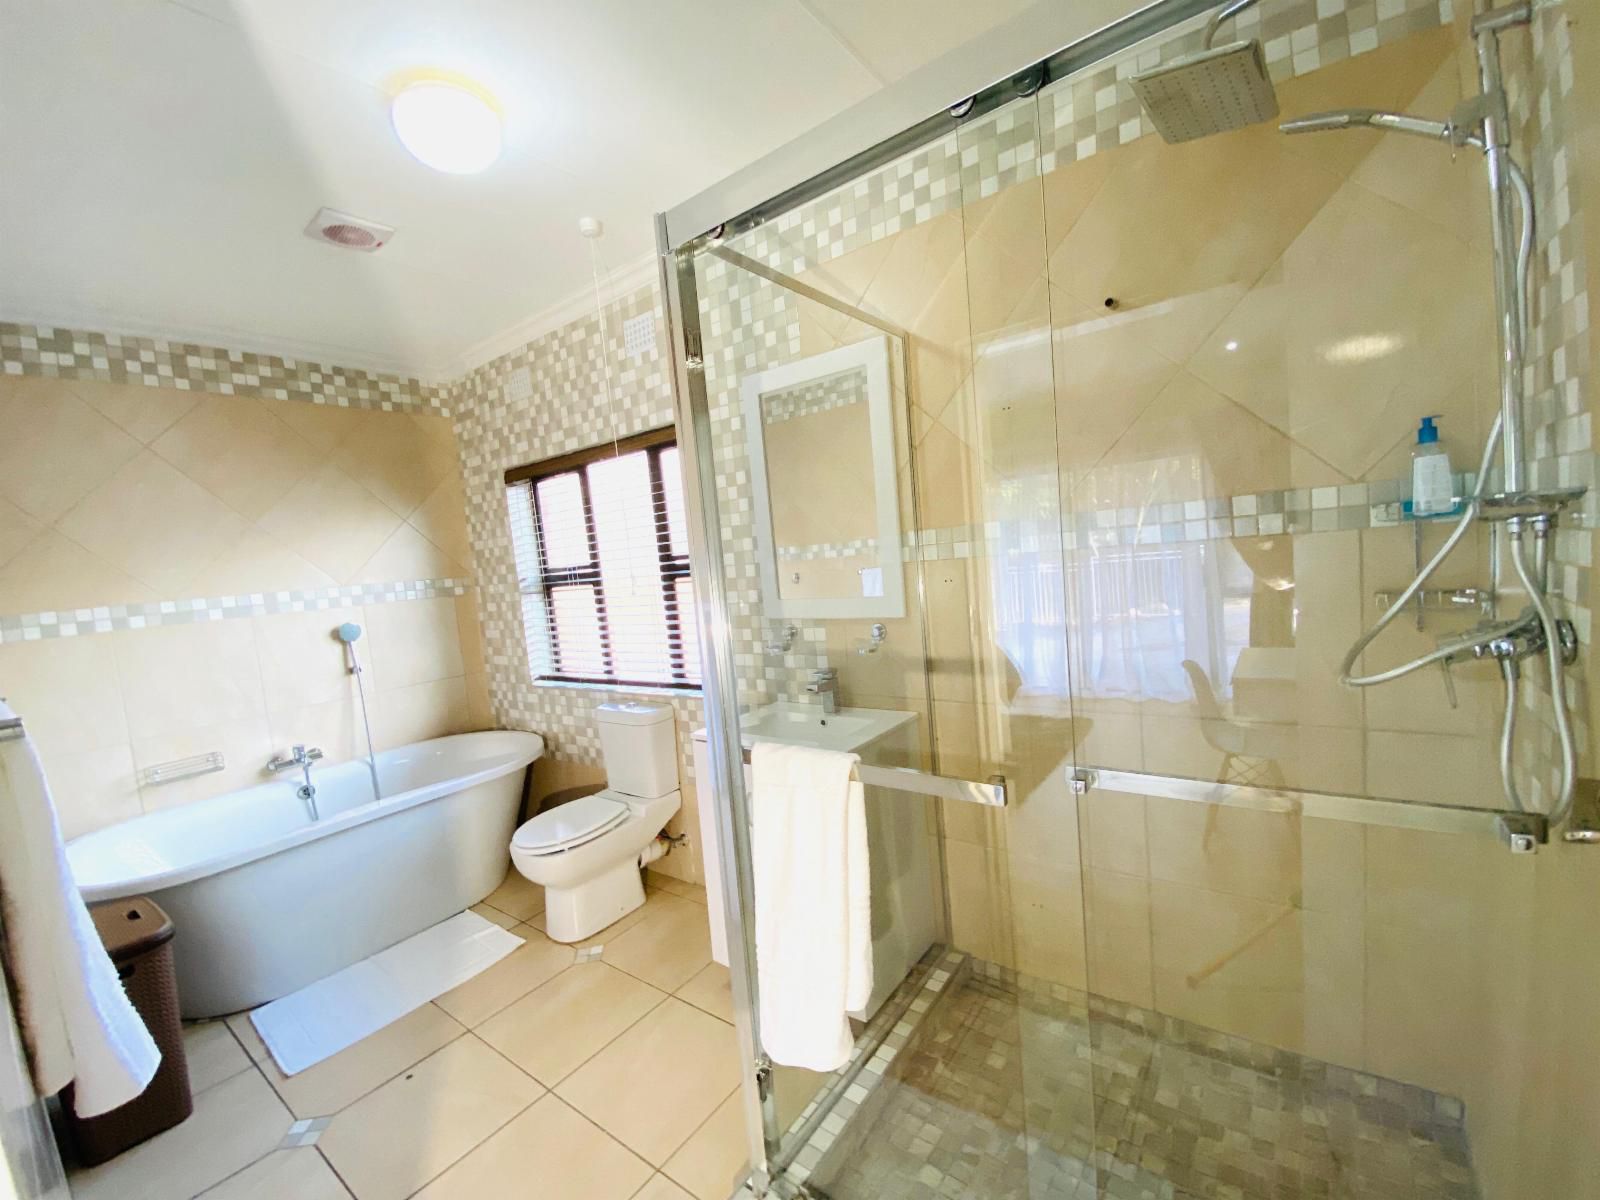 C And C Hotel Vibes Randpark Ridge Johannesburg Gauteng South Africa Bathroom